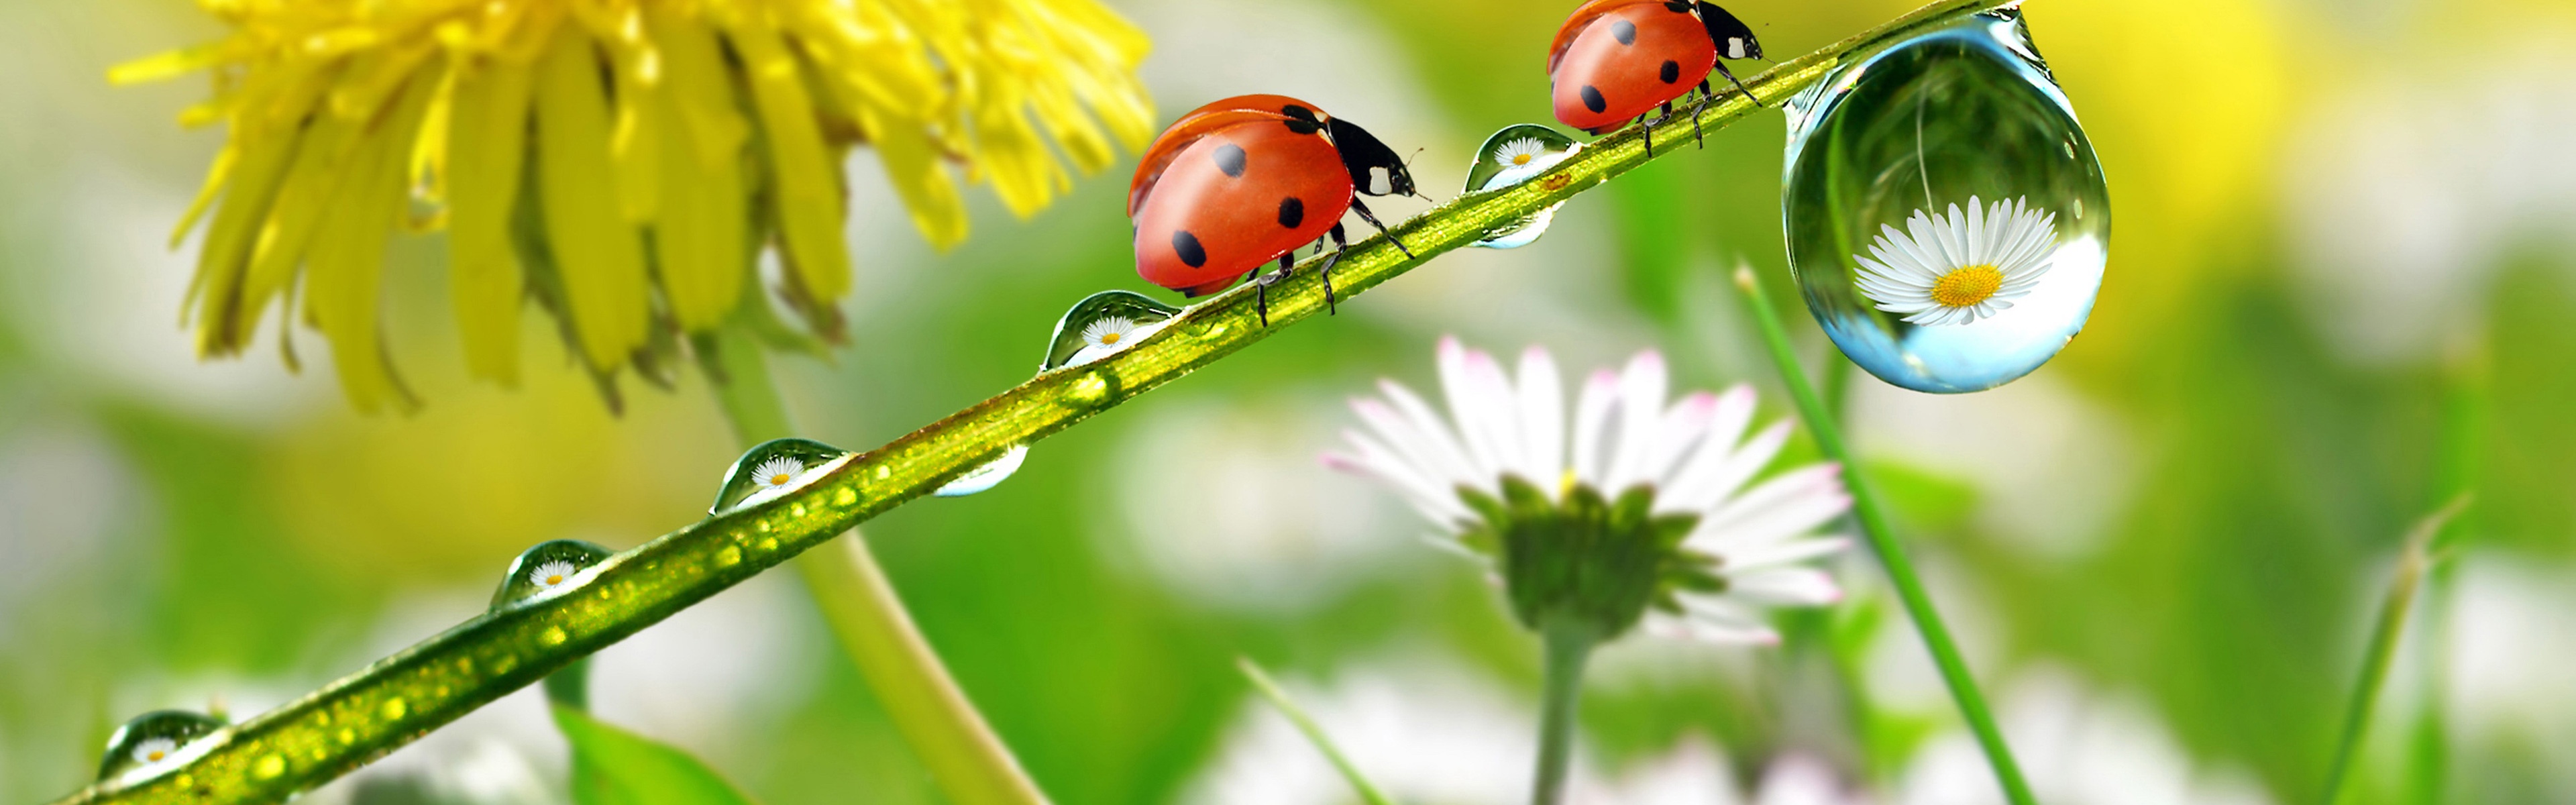 Dandelions Ladybugs Drops Nature